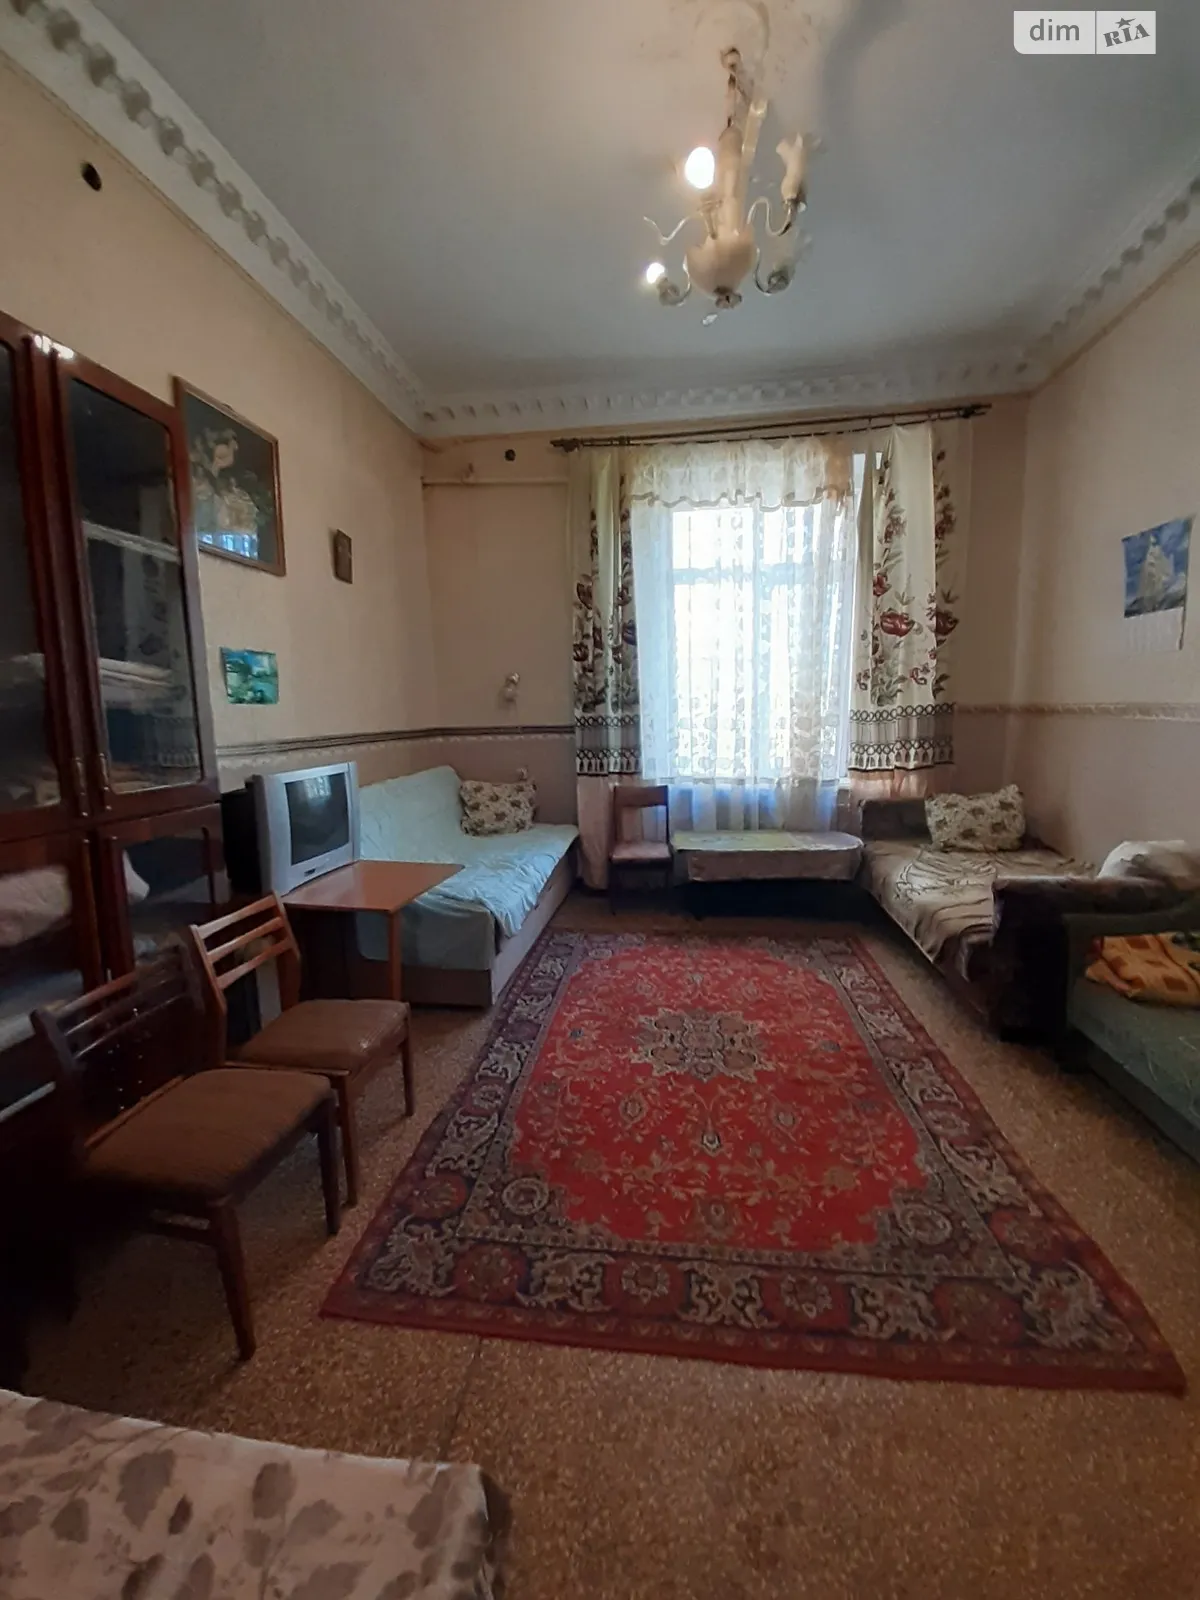 Сдается в аренду комната 70 кв. м в Одессе, цена: 4000 грн - фото 1